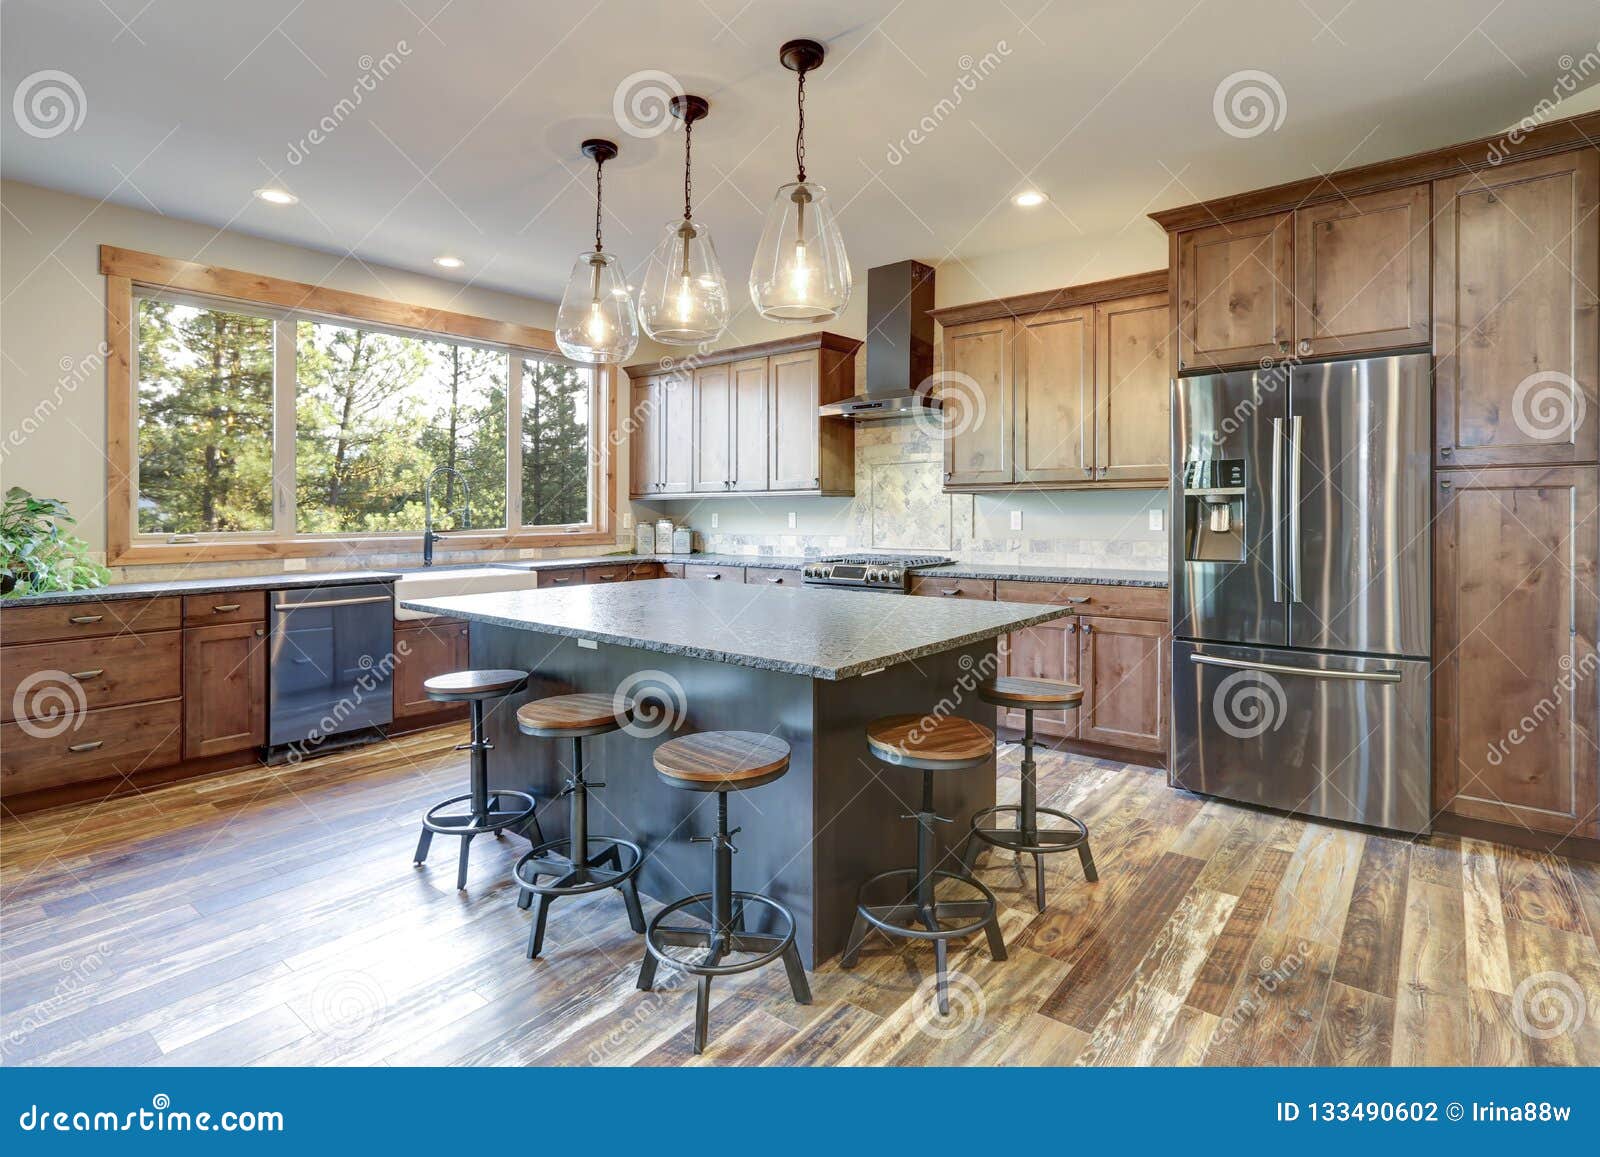 Luxurious Open Plan Kitchen Design With Large Center Island Stock Photo Image Of Hardwood